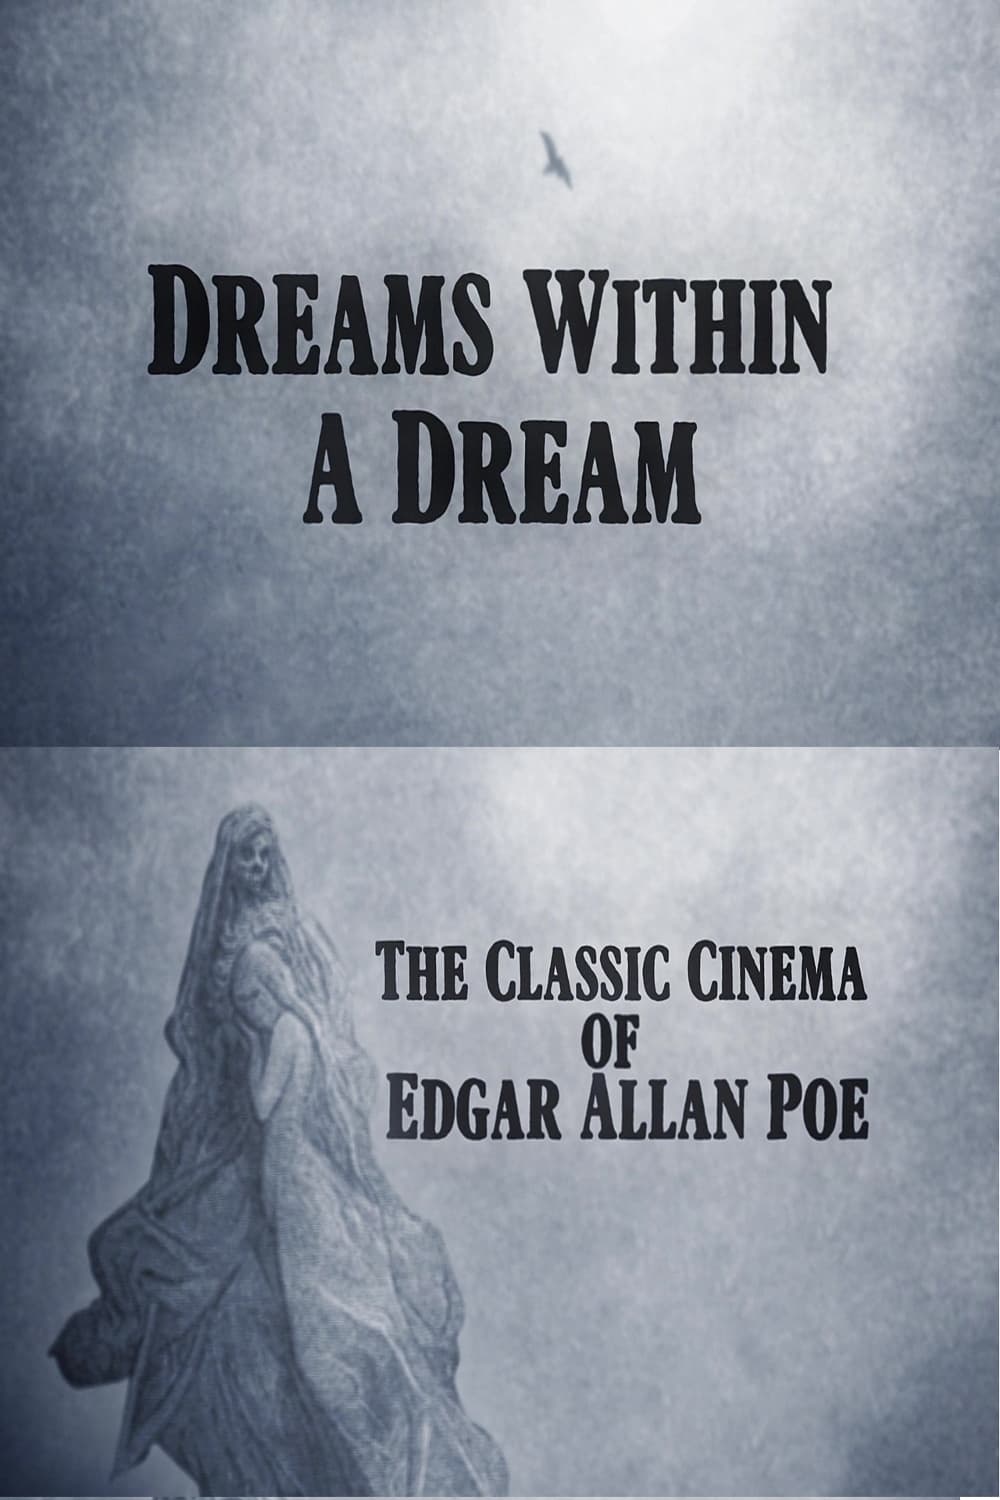 Dreams Within a Dream: The Classic Cinema of Edgar Allan Poe